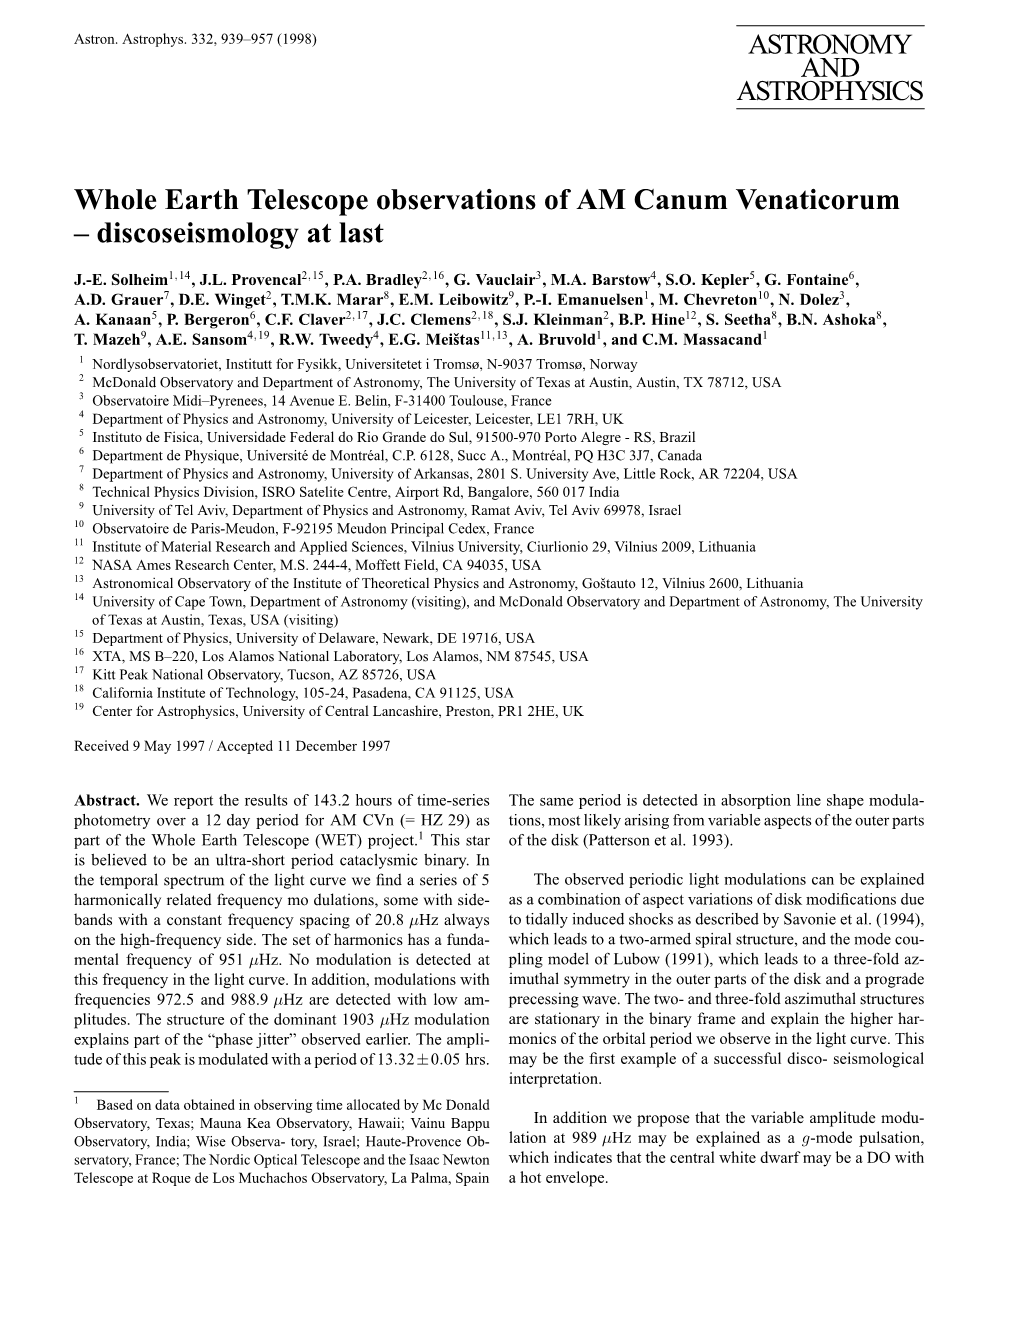 Whole Earth Telescope Observations of AM Canum Venaticorum – Discoseismology at Last